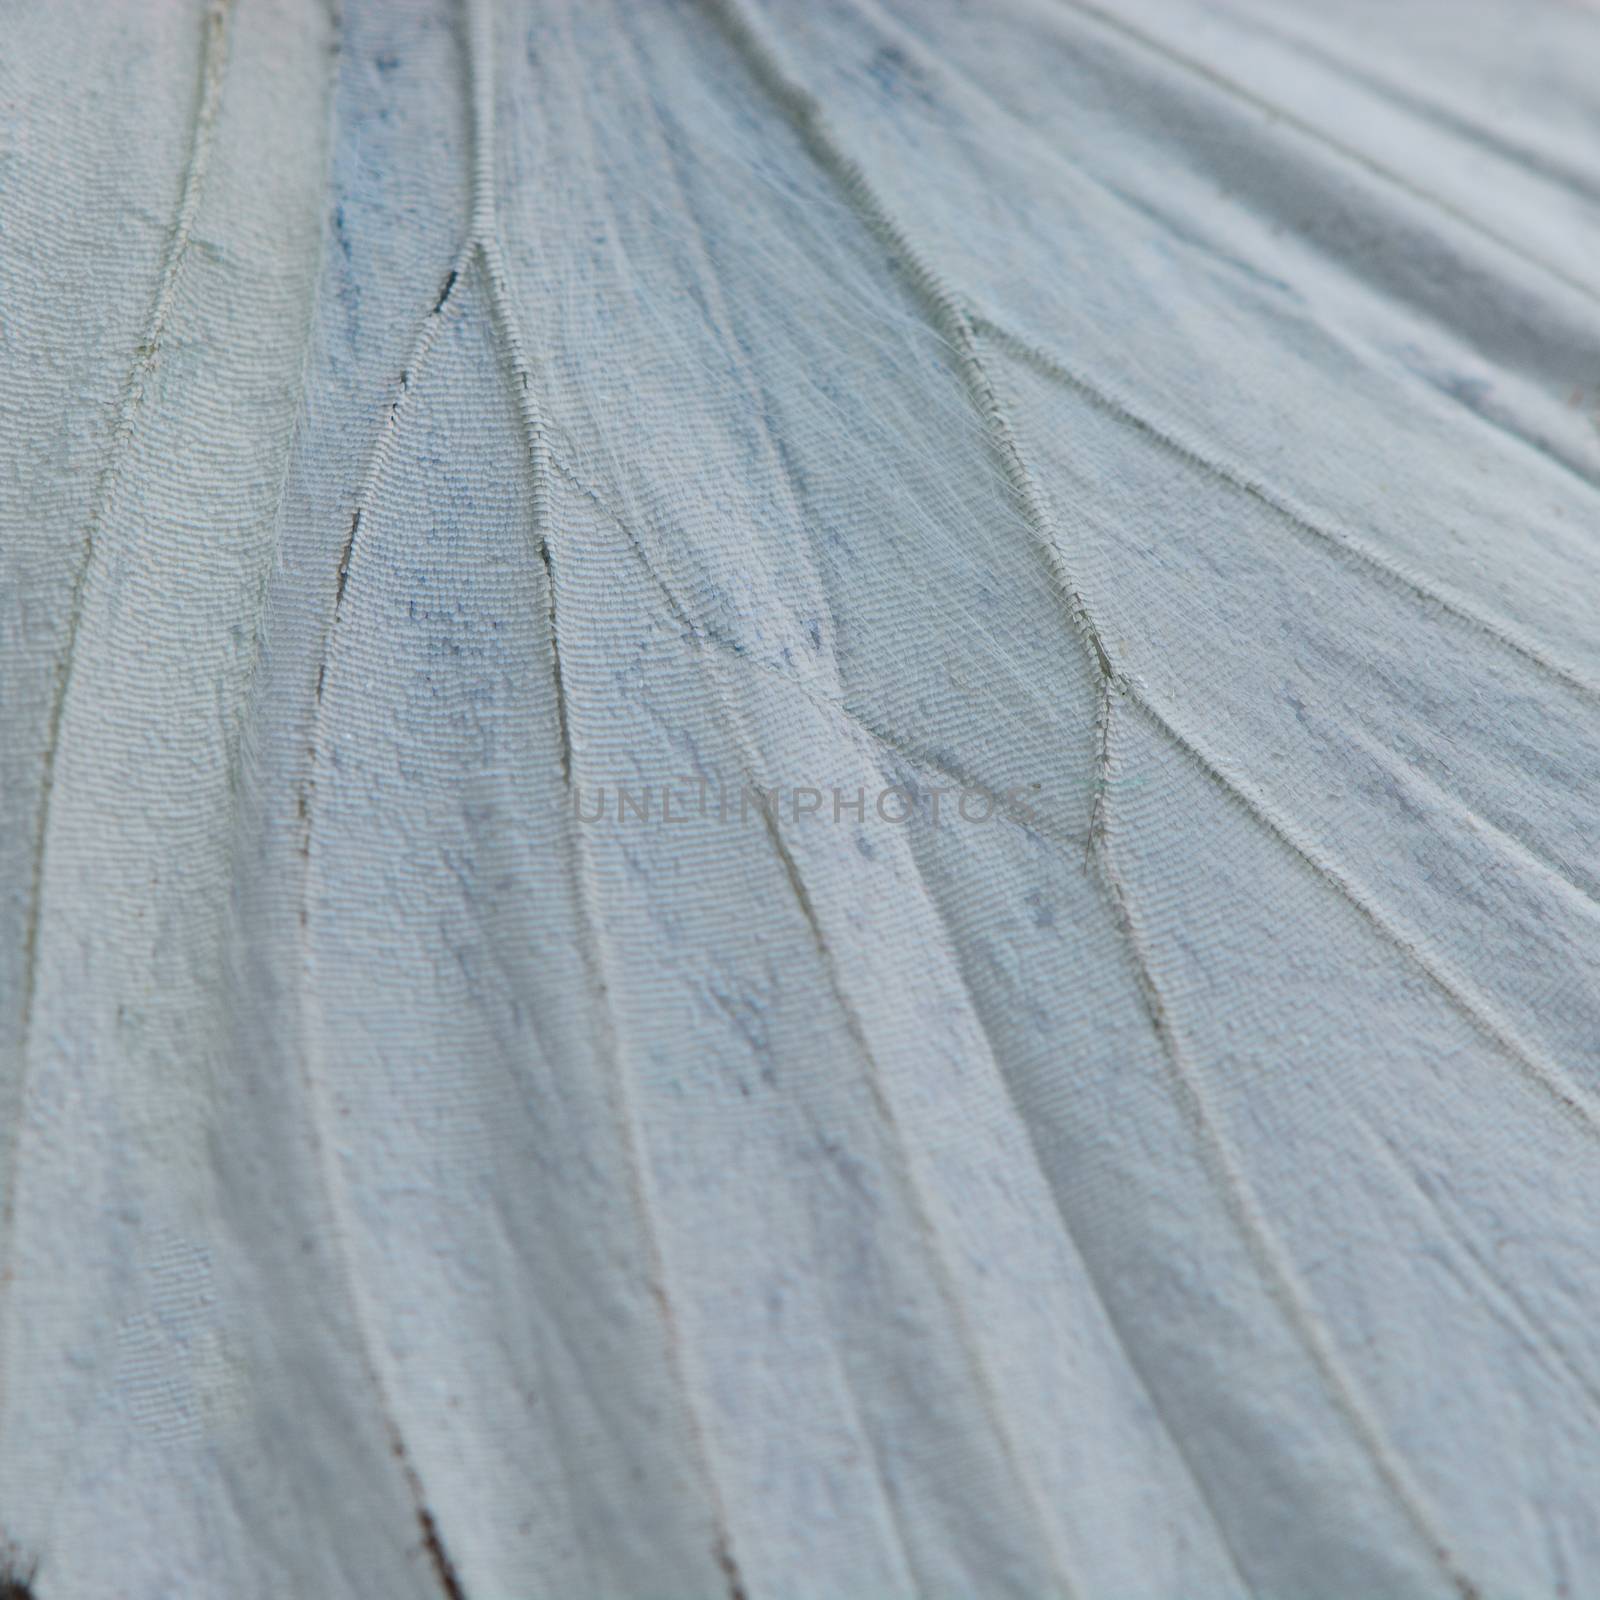 white butterfly wing by panuruangjan